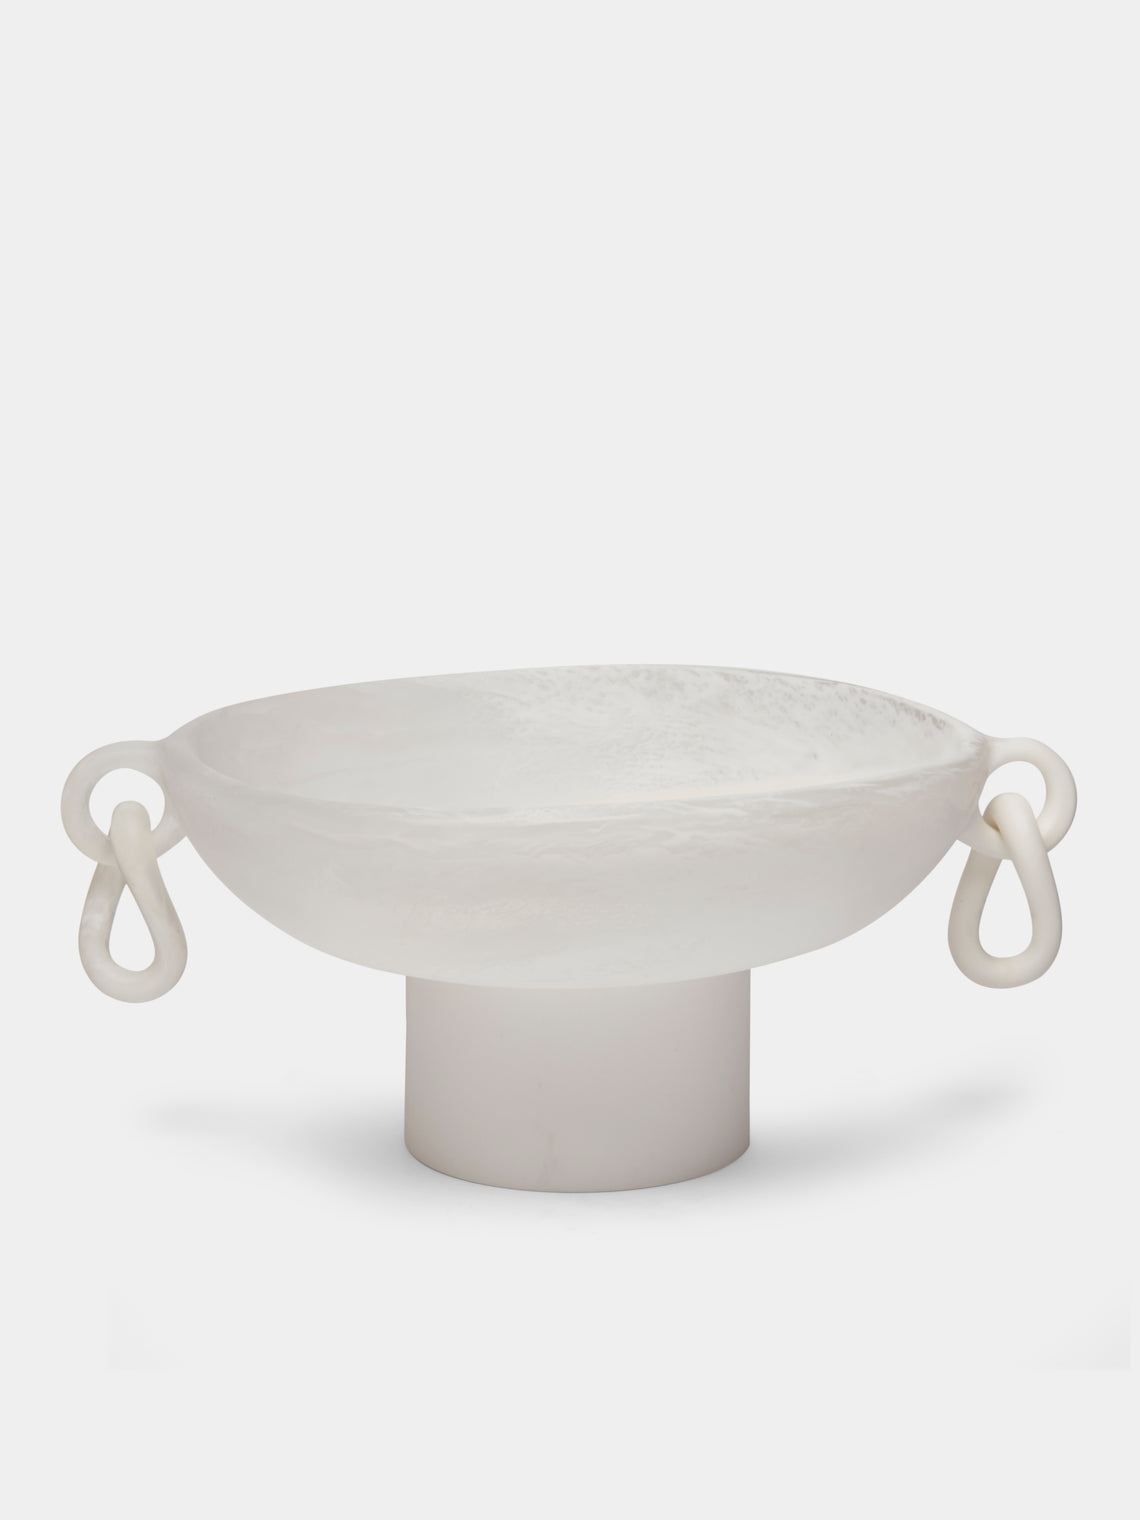 Revolution of Forms - Alamo Resin Vase - White - ABASK - 